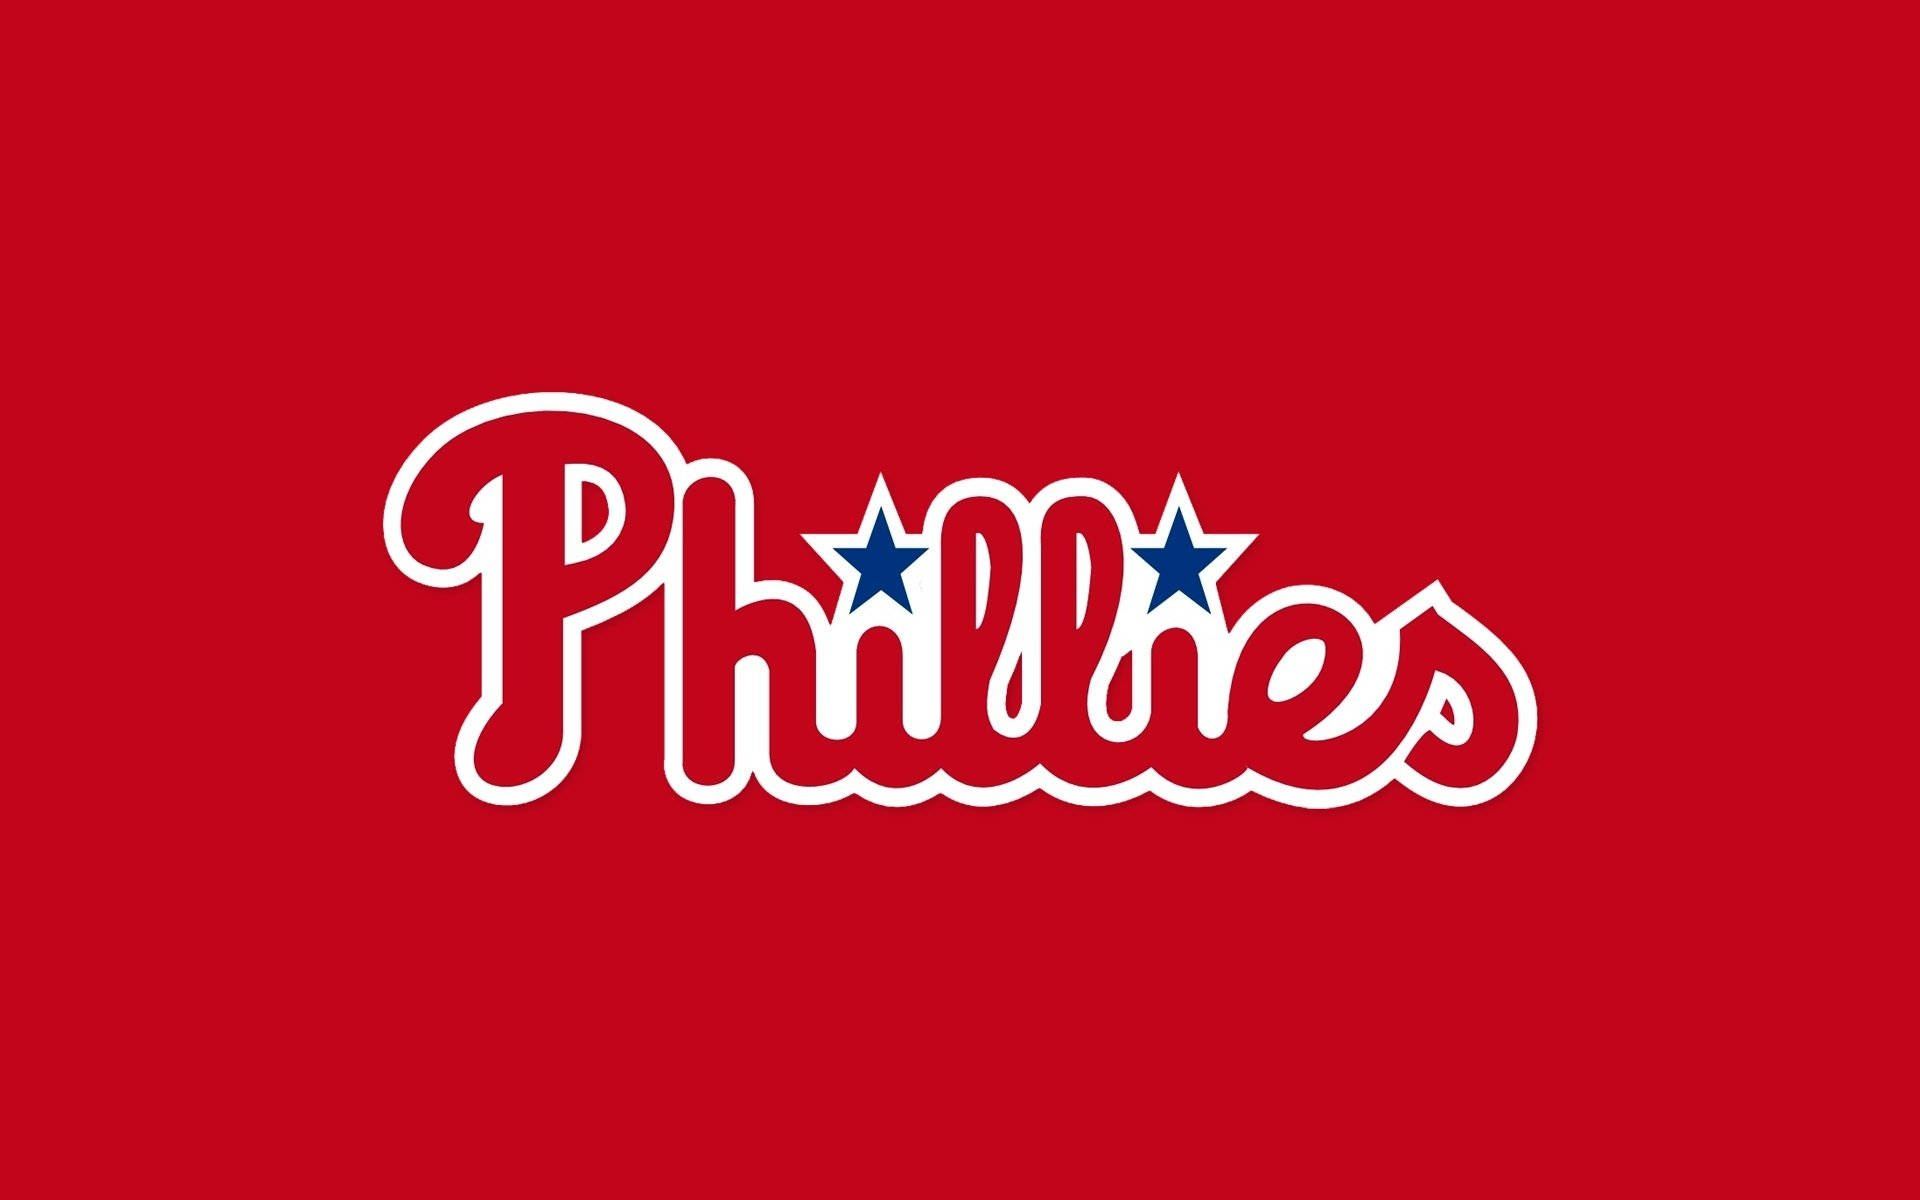 Philadelphia Phillies Word Mark